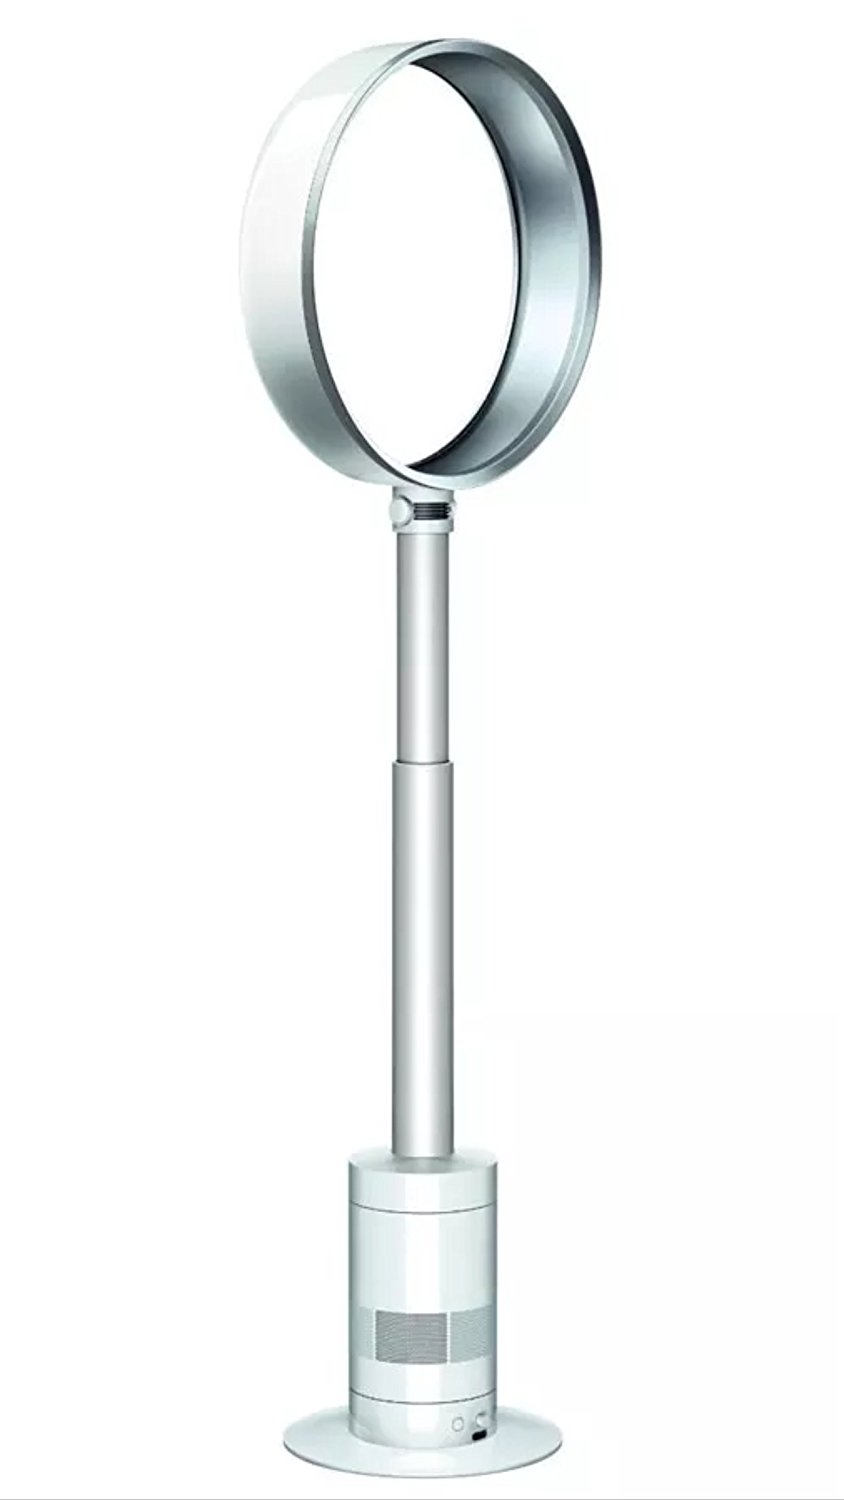 Save on Dyson AM08 Air Multiplier Pedestal Fan – Just $149.99!